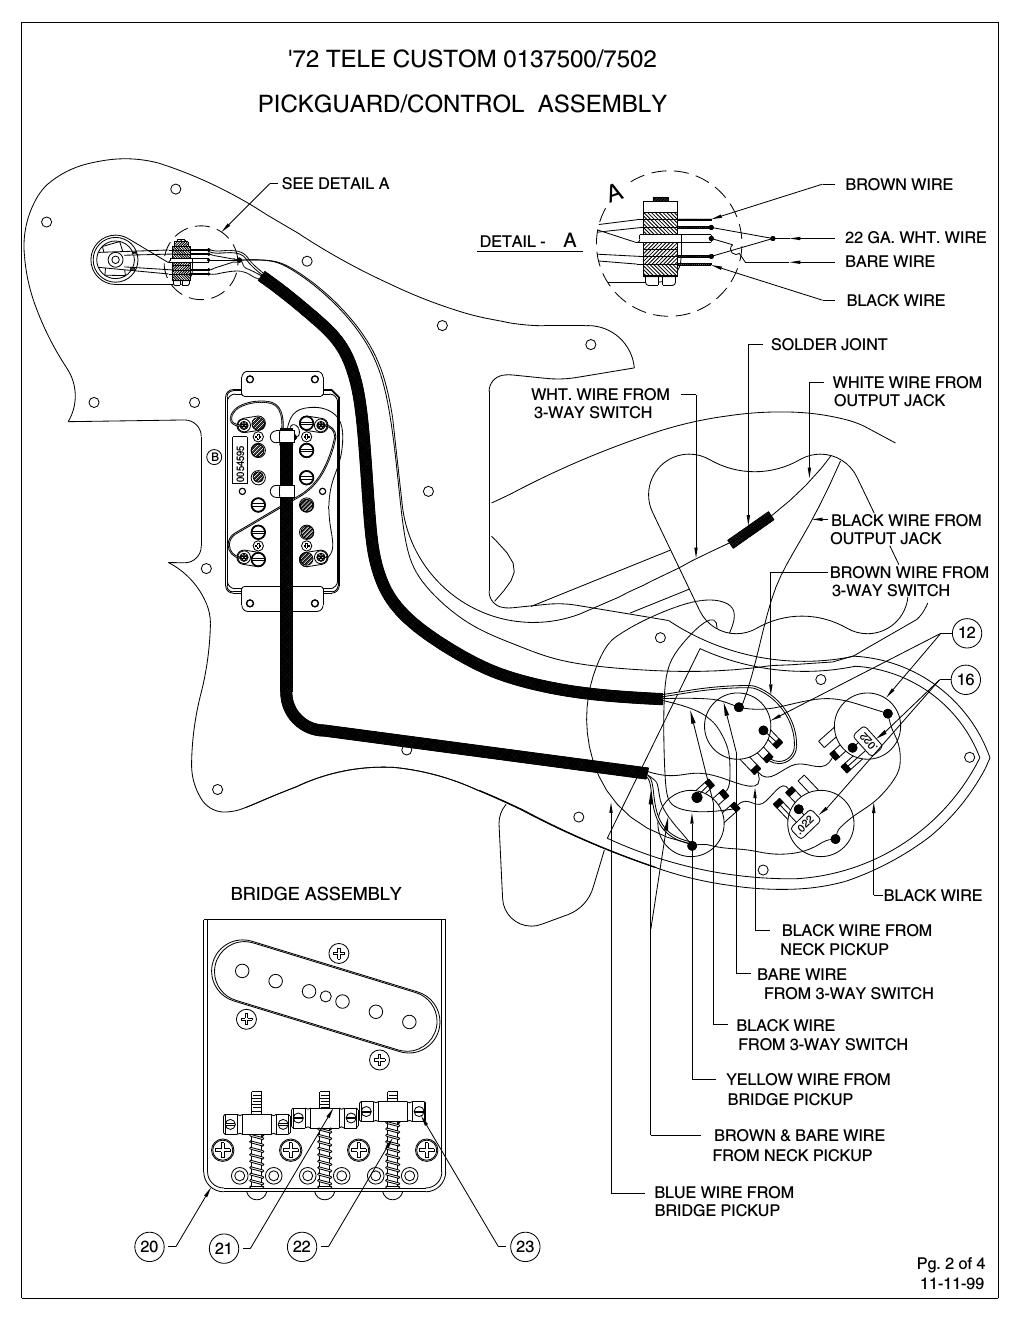 fender 72 tele custom wiring diagram